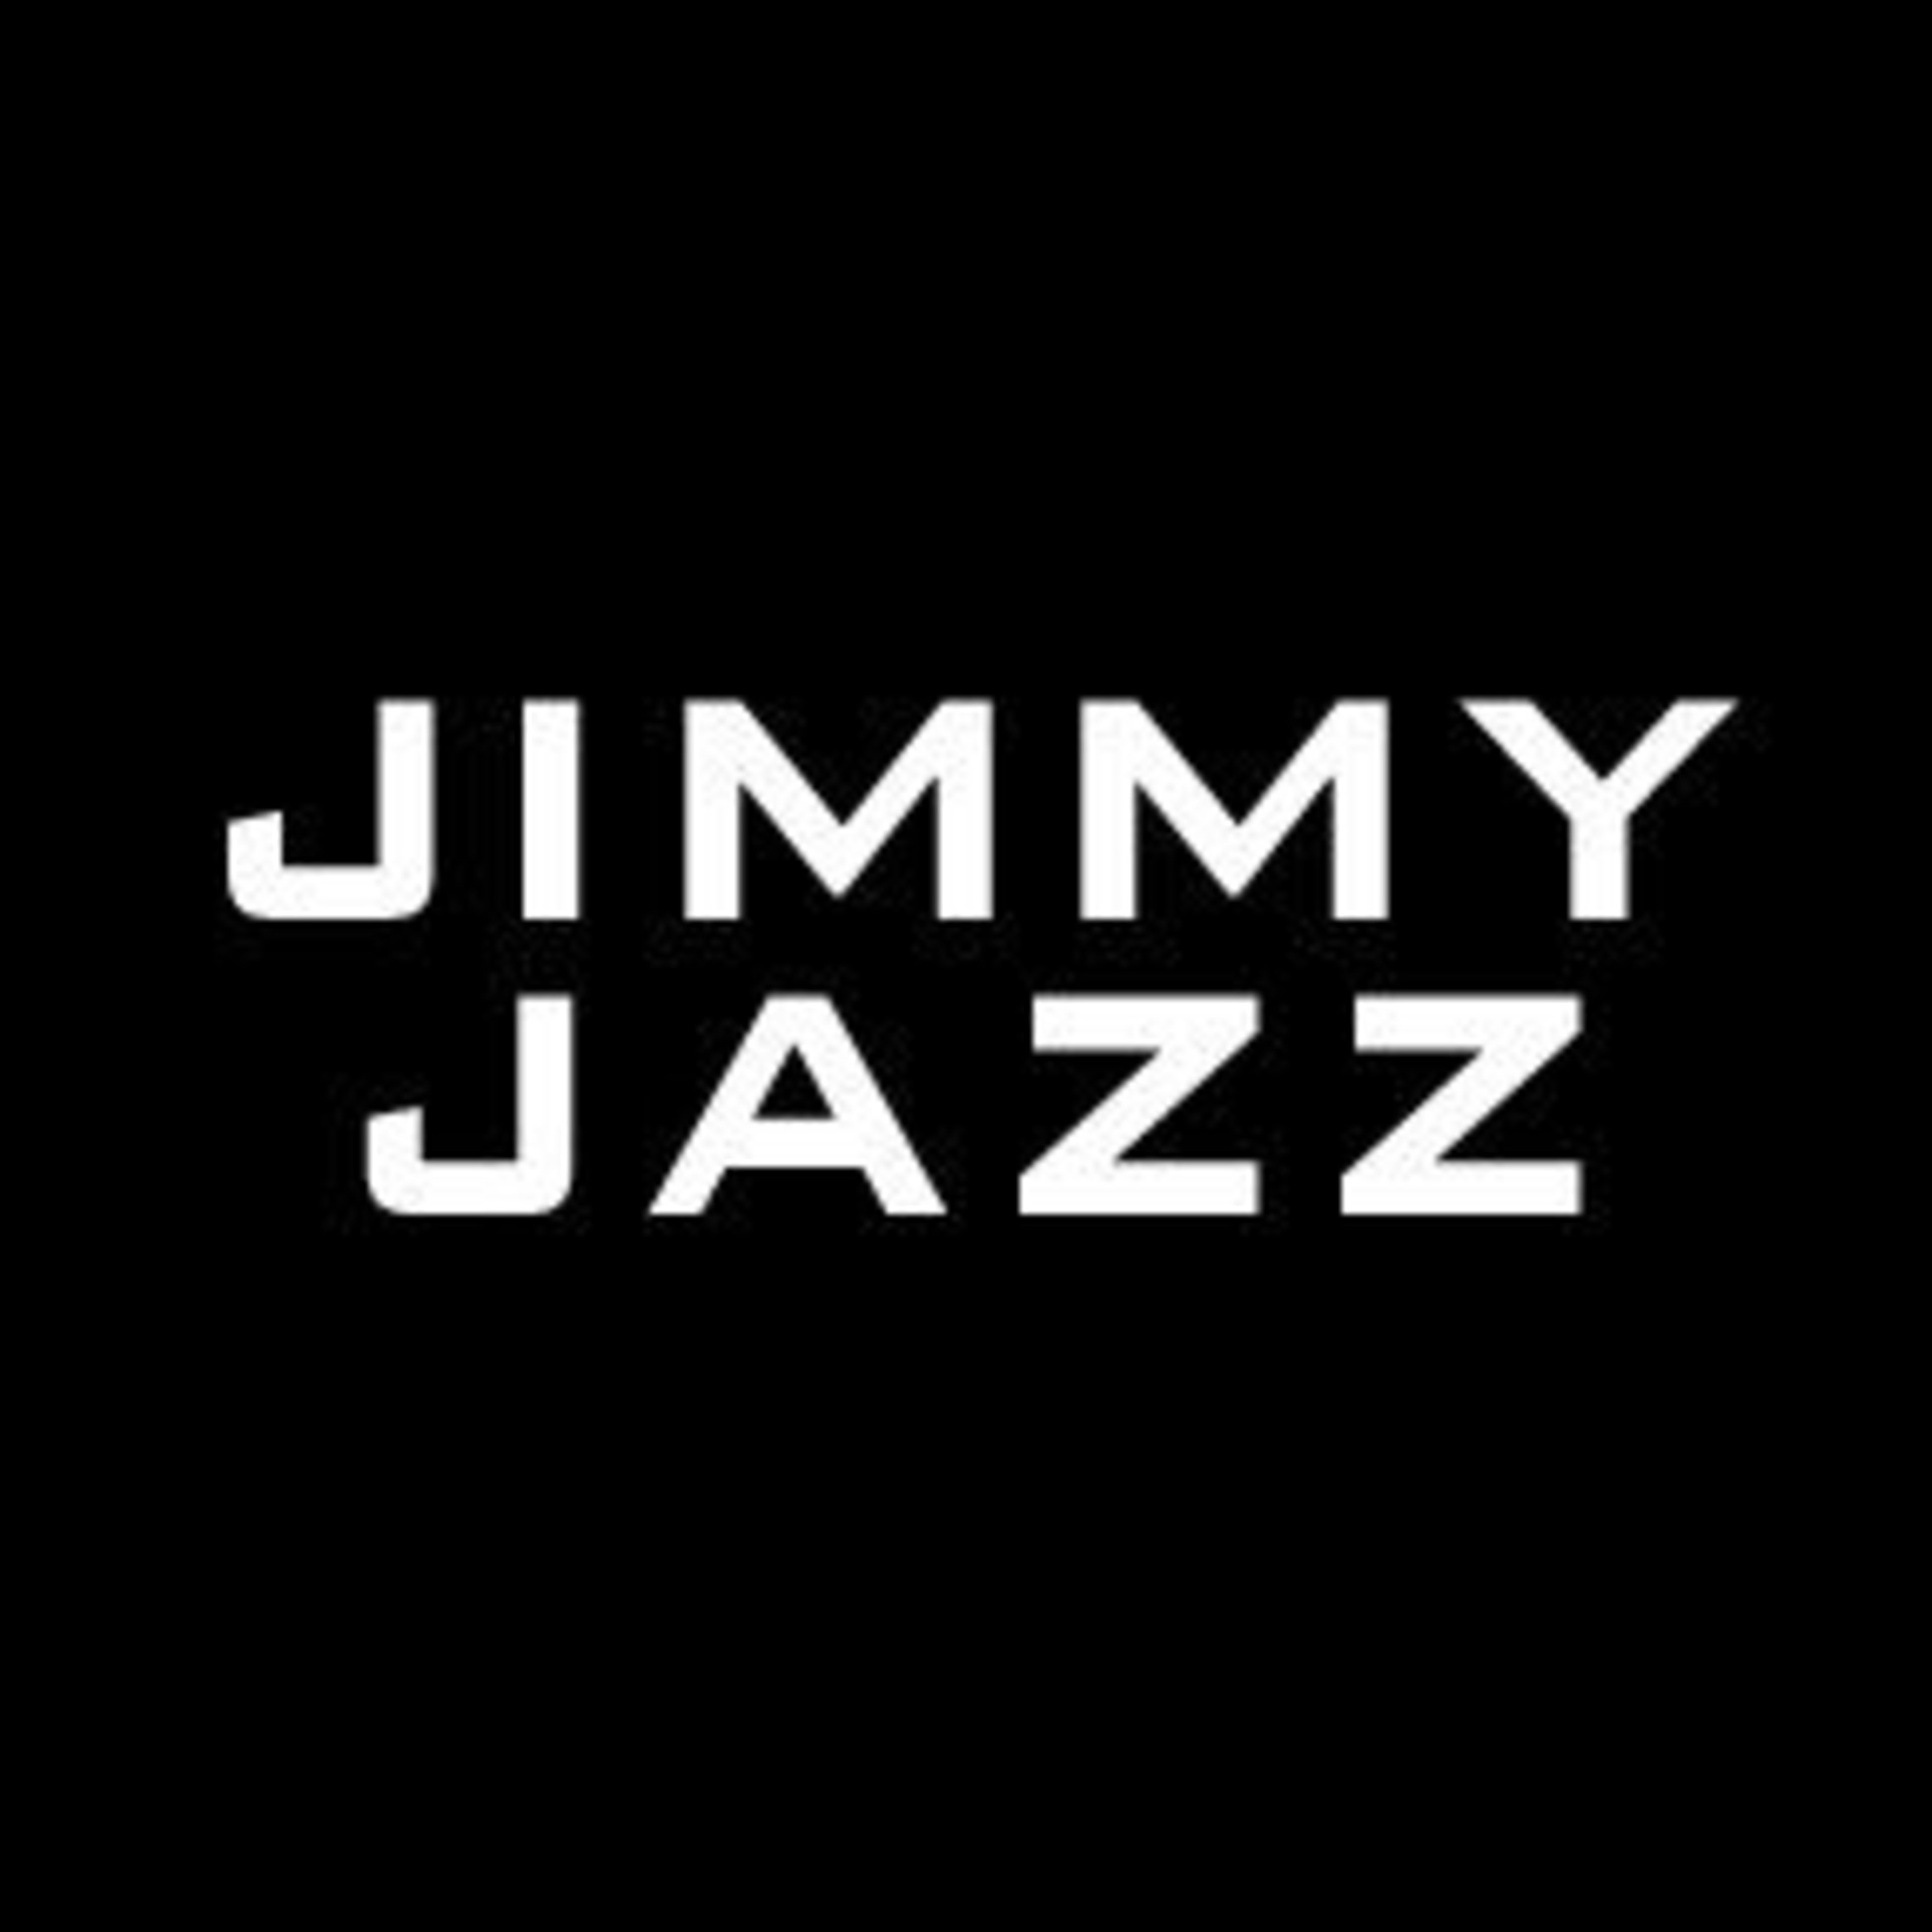 Jimmy JazzCode